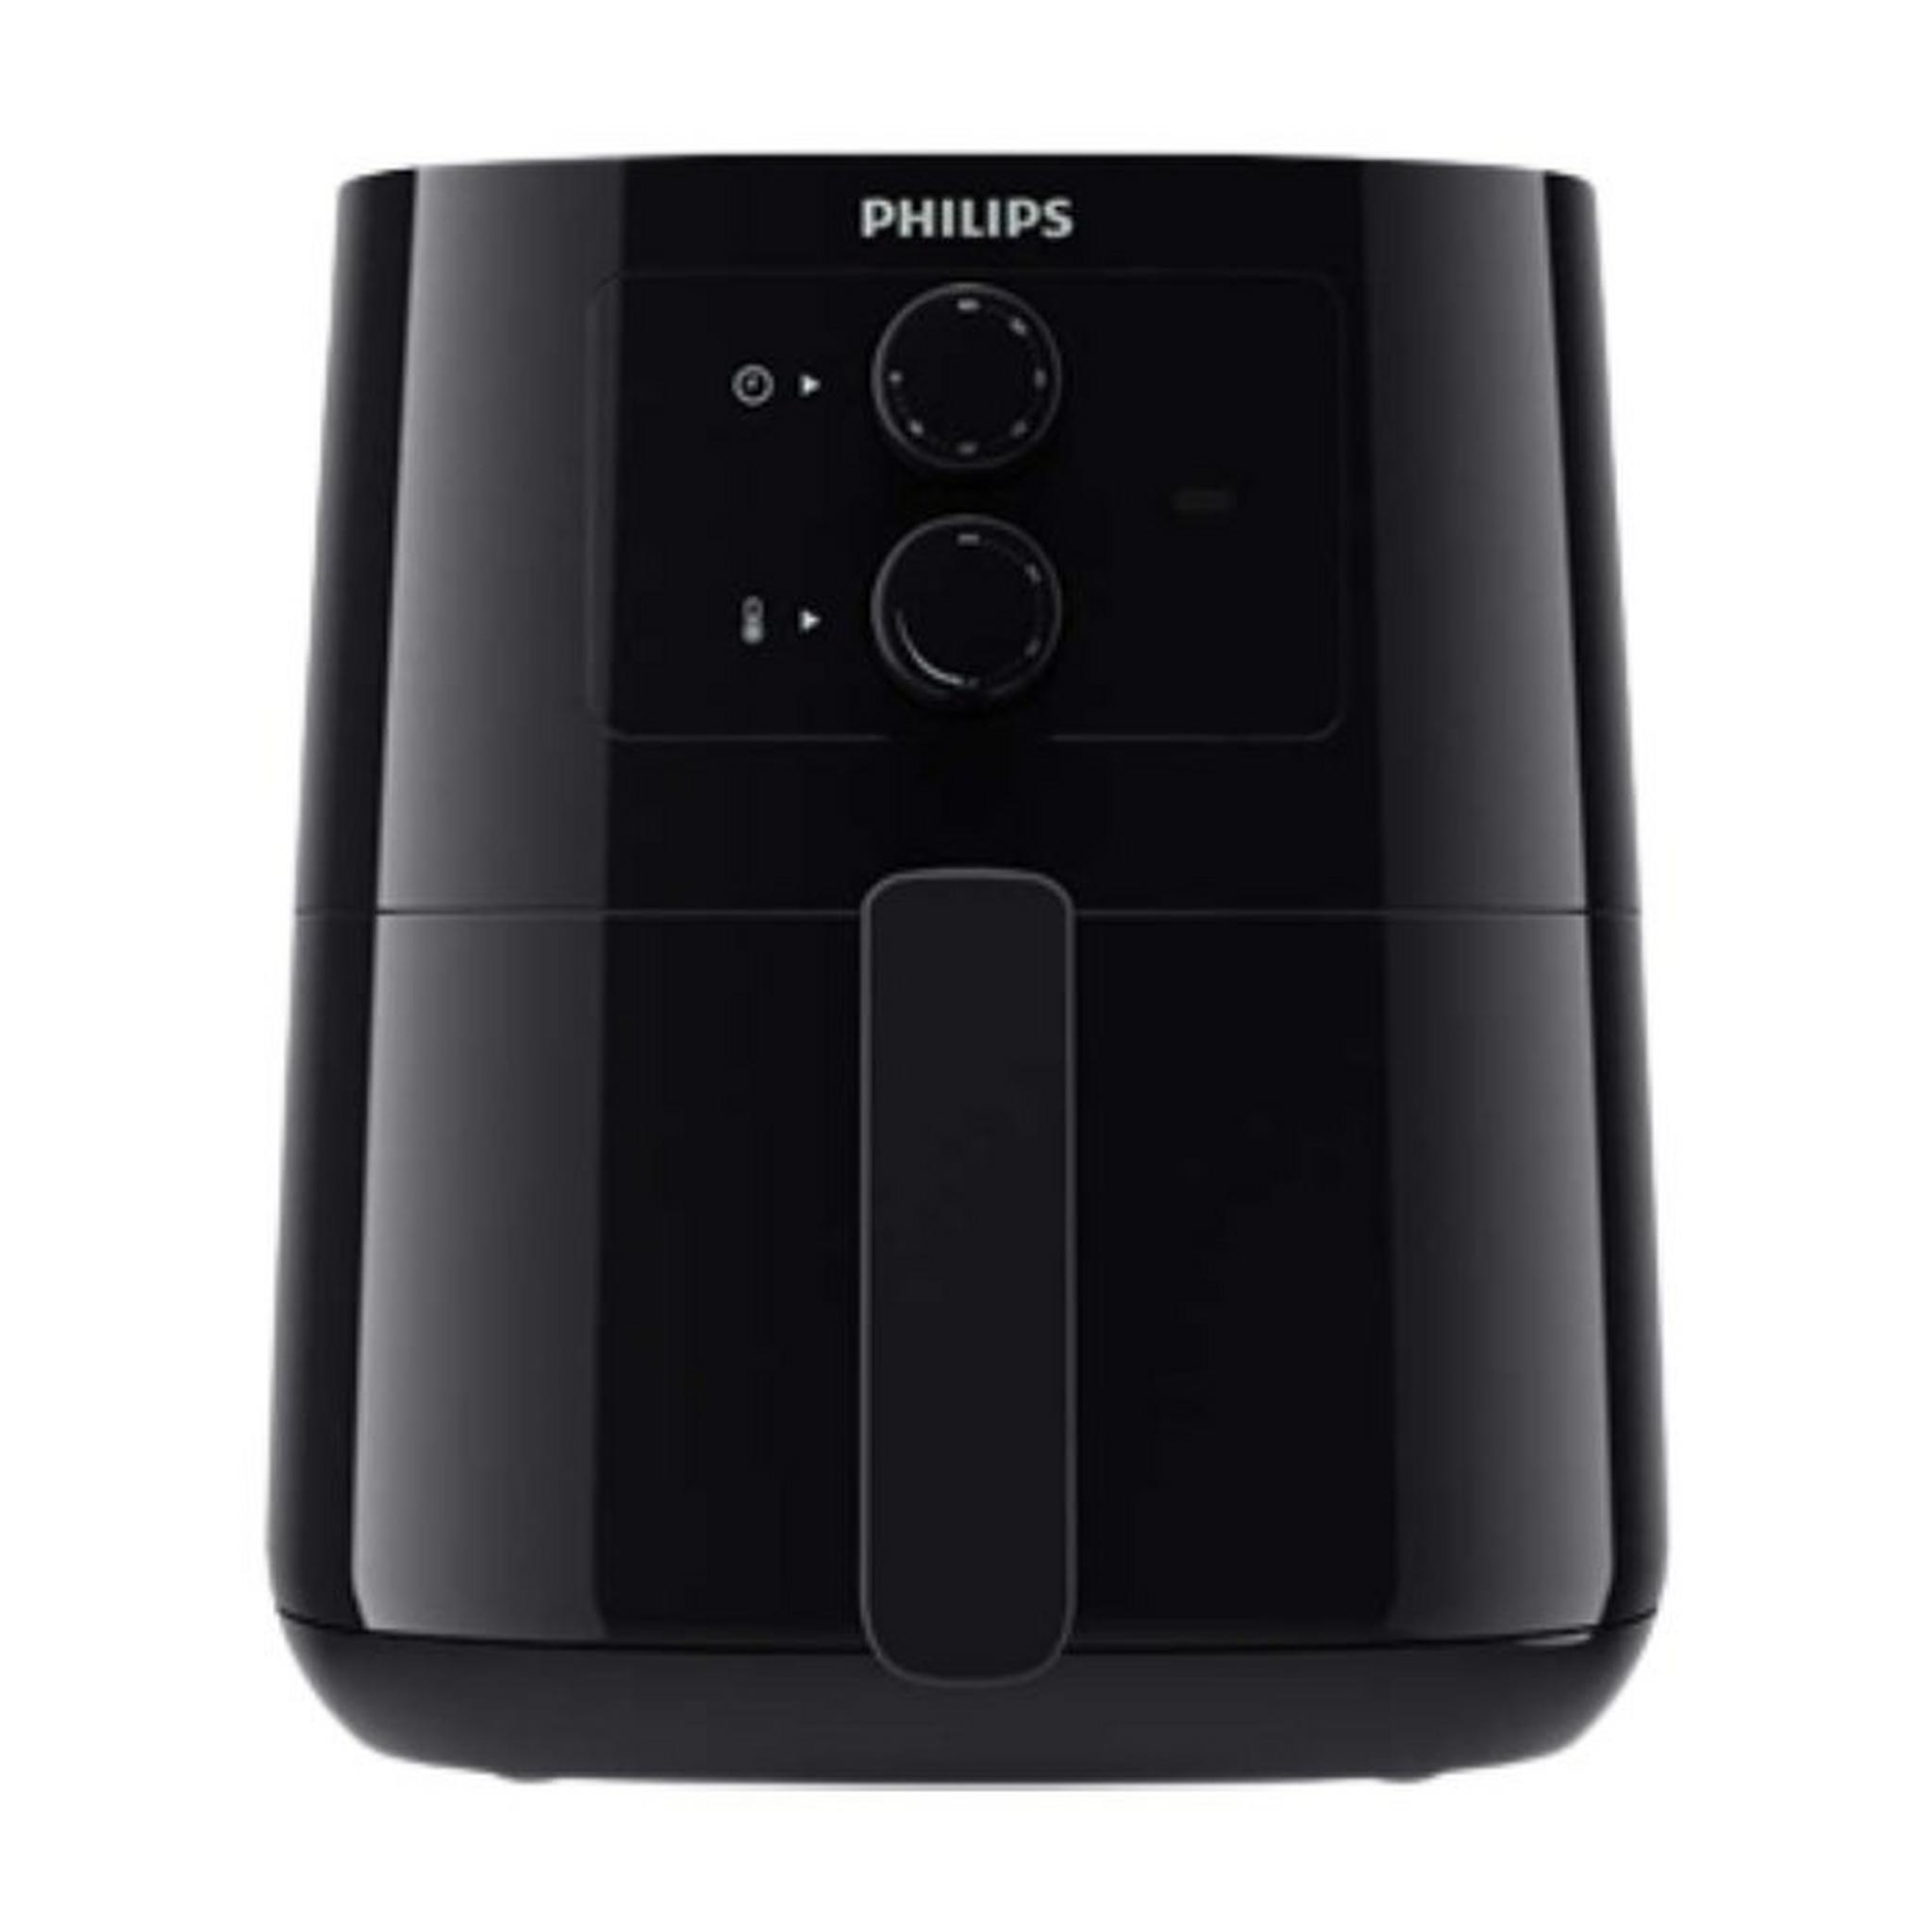 Philips Air fryer 0.8 Kg prices in KSA | Shop online - Xcite